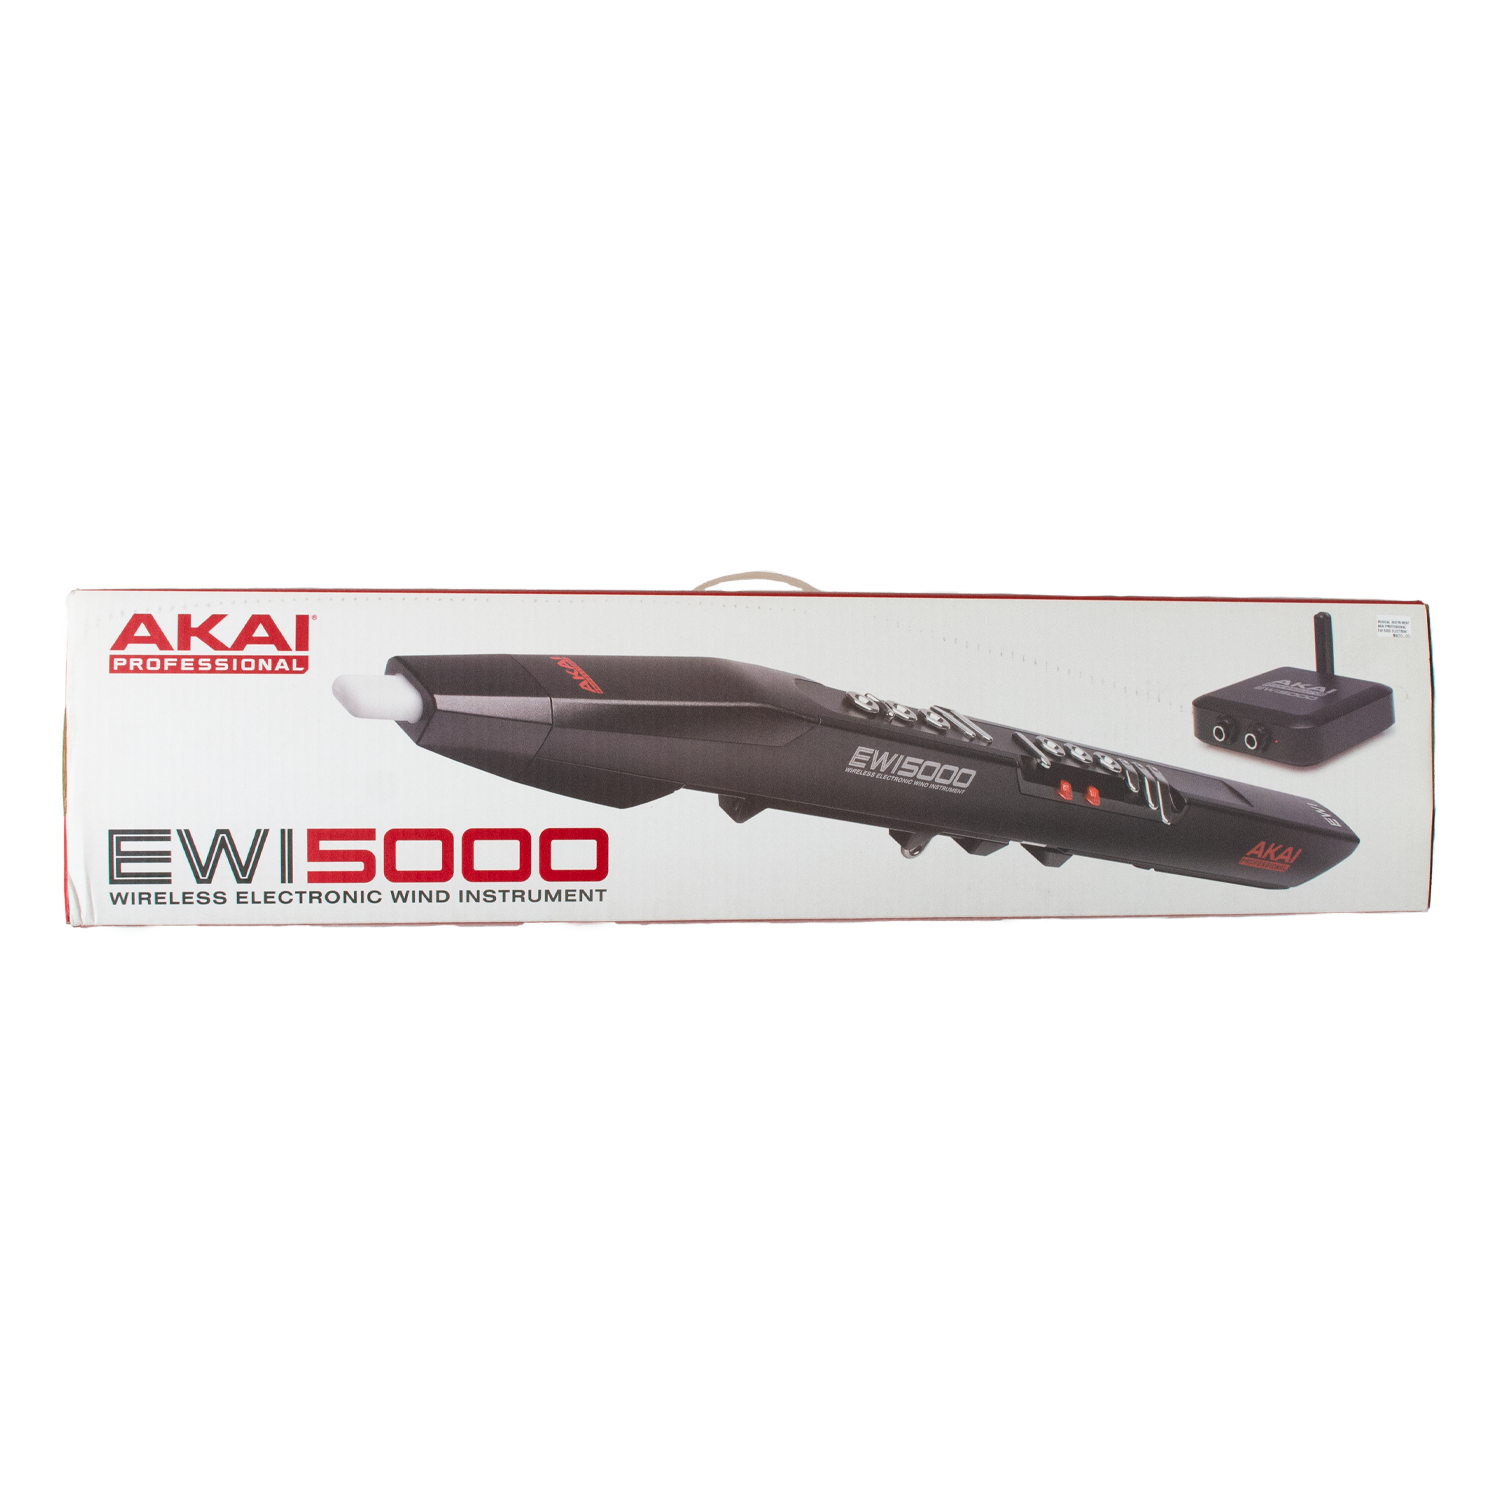 Akai Professional EWI 5000 Electronic Wind Instrument / MIDI Controller